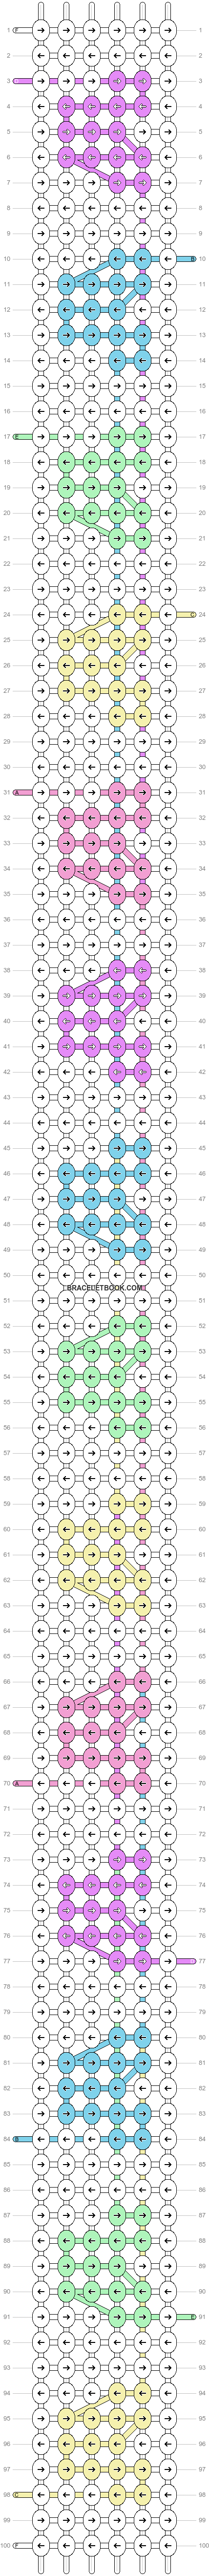 Alpha pattern #56701 variation #99005 pattern